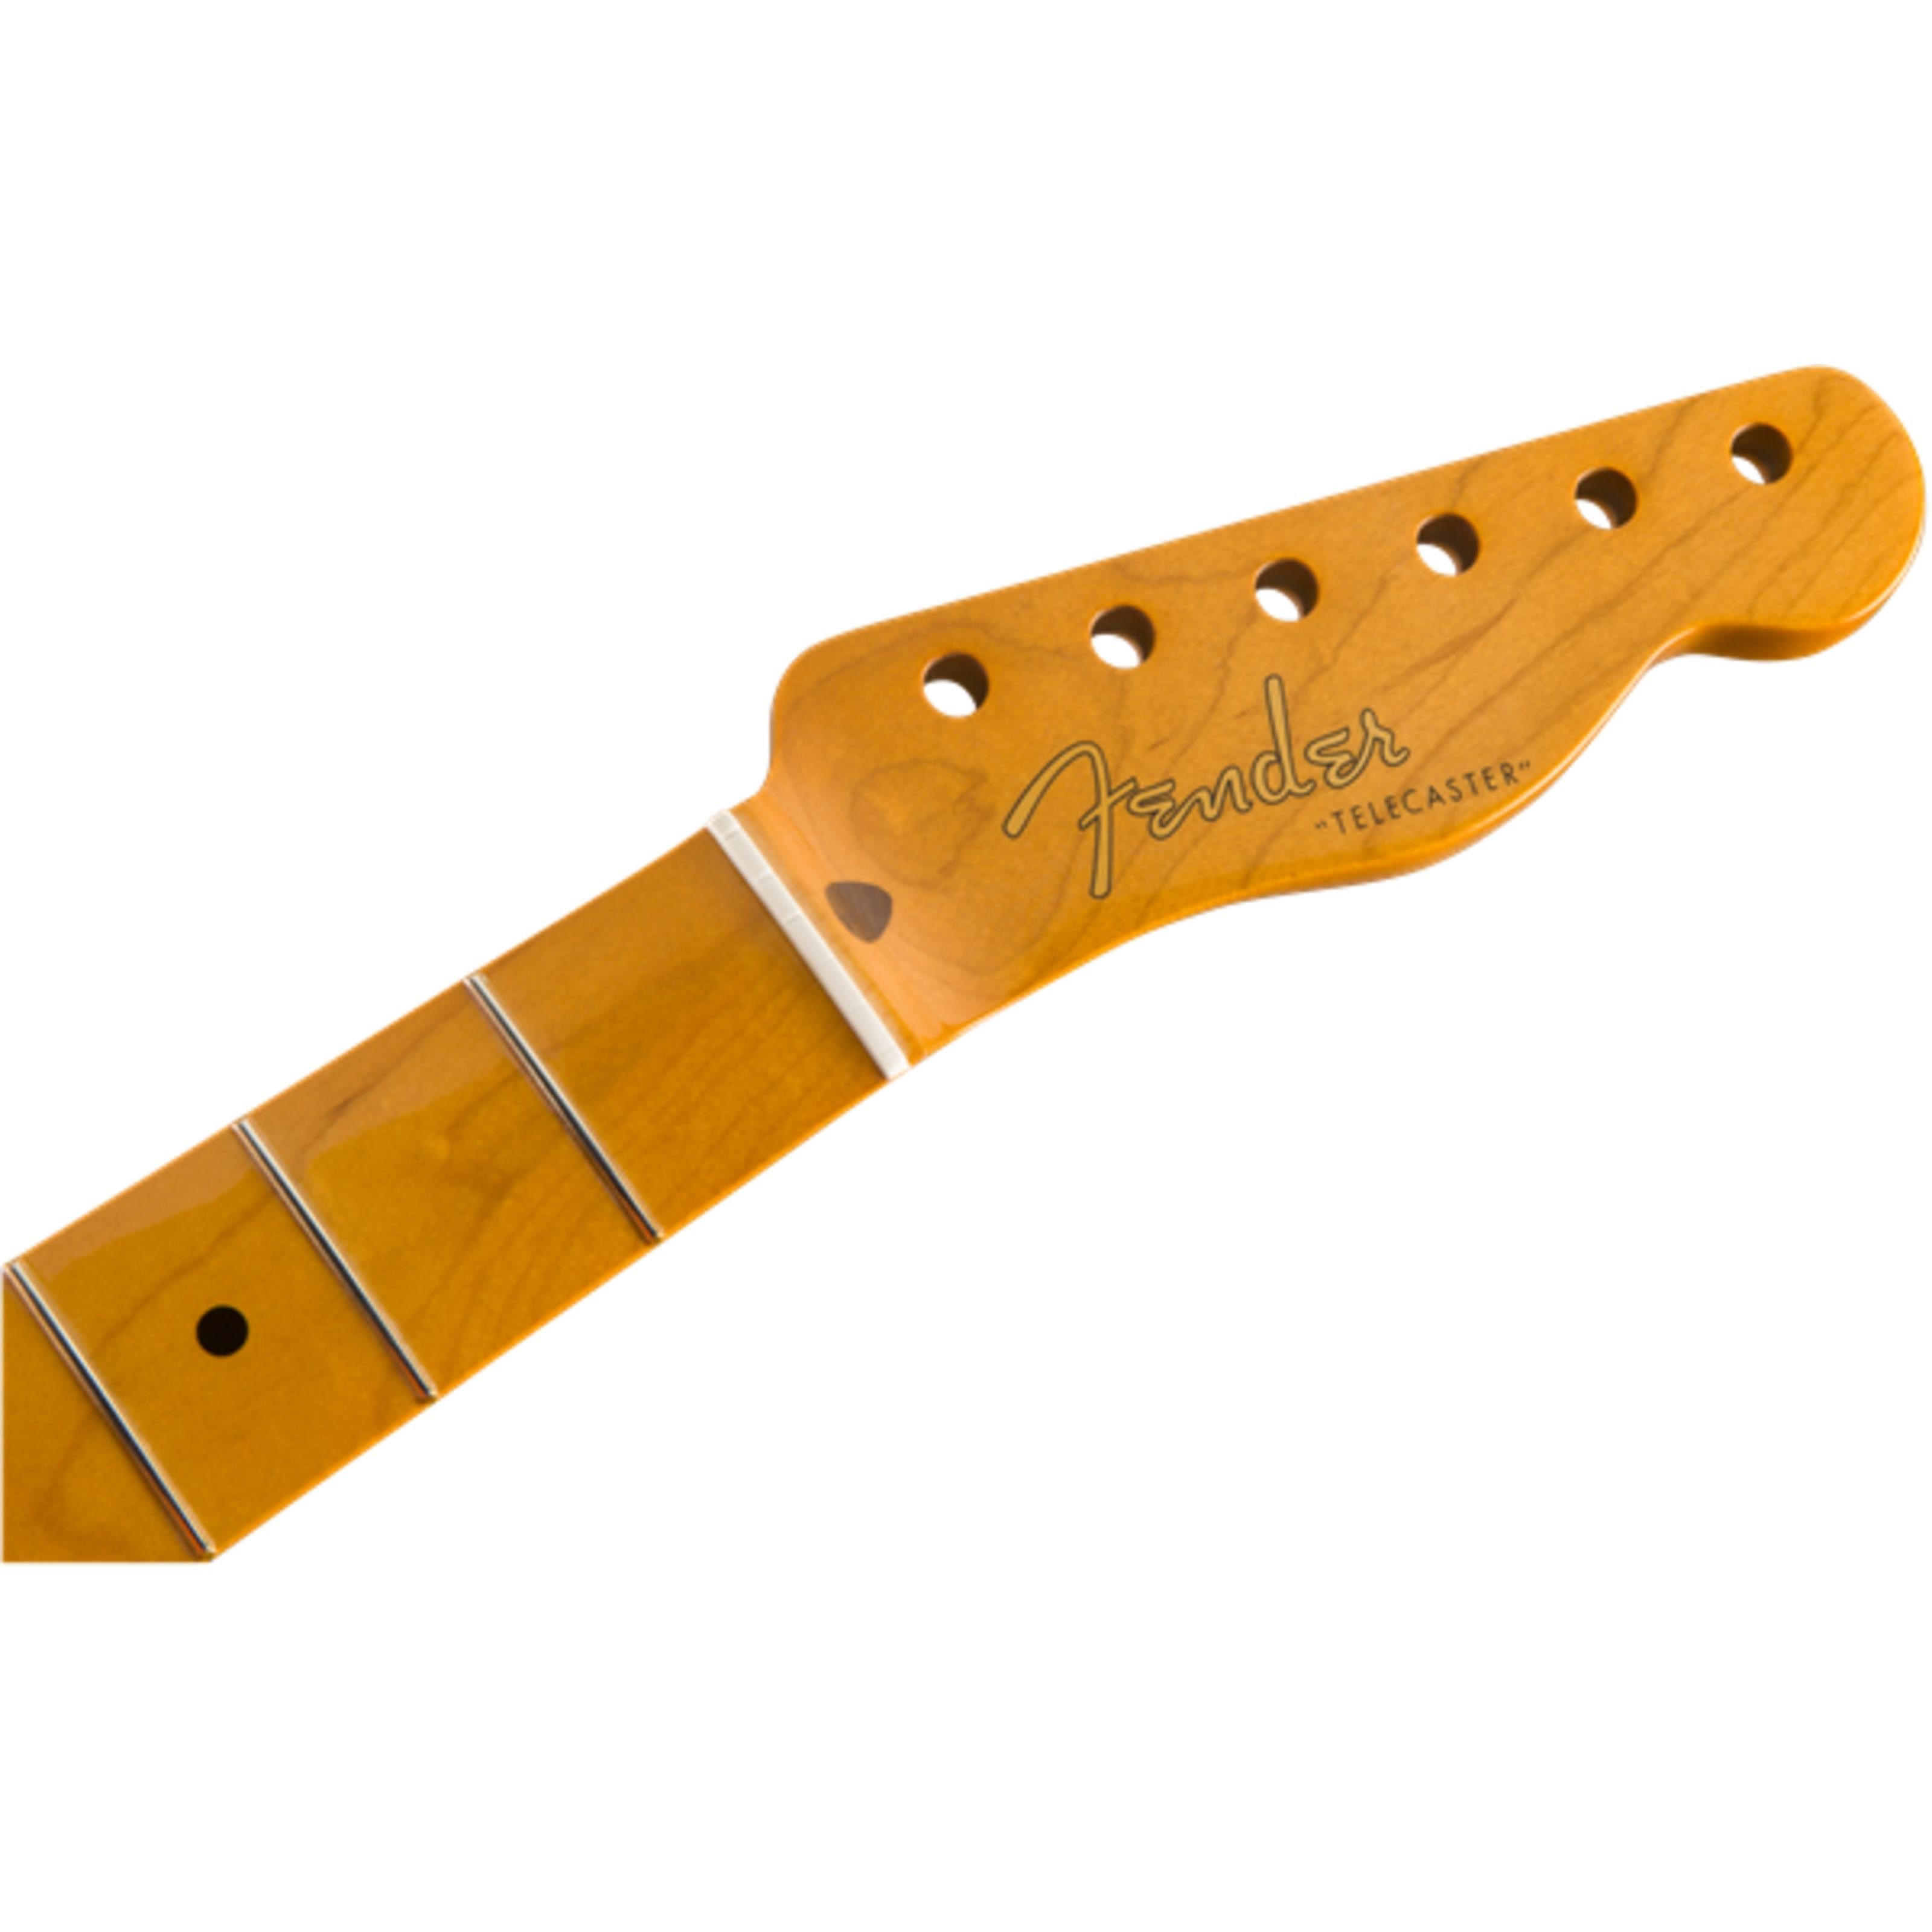 Series Spielzeug-Musikinstrument, Telecaster Finish MN - '50s Ersat Classic Fender Gitarren Lacquer Neck